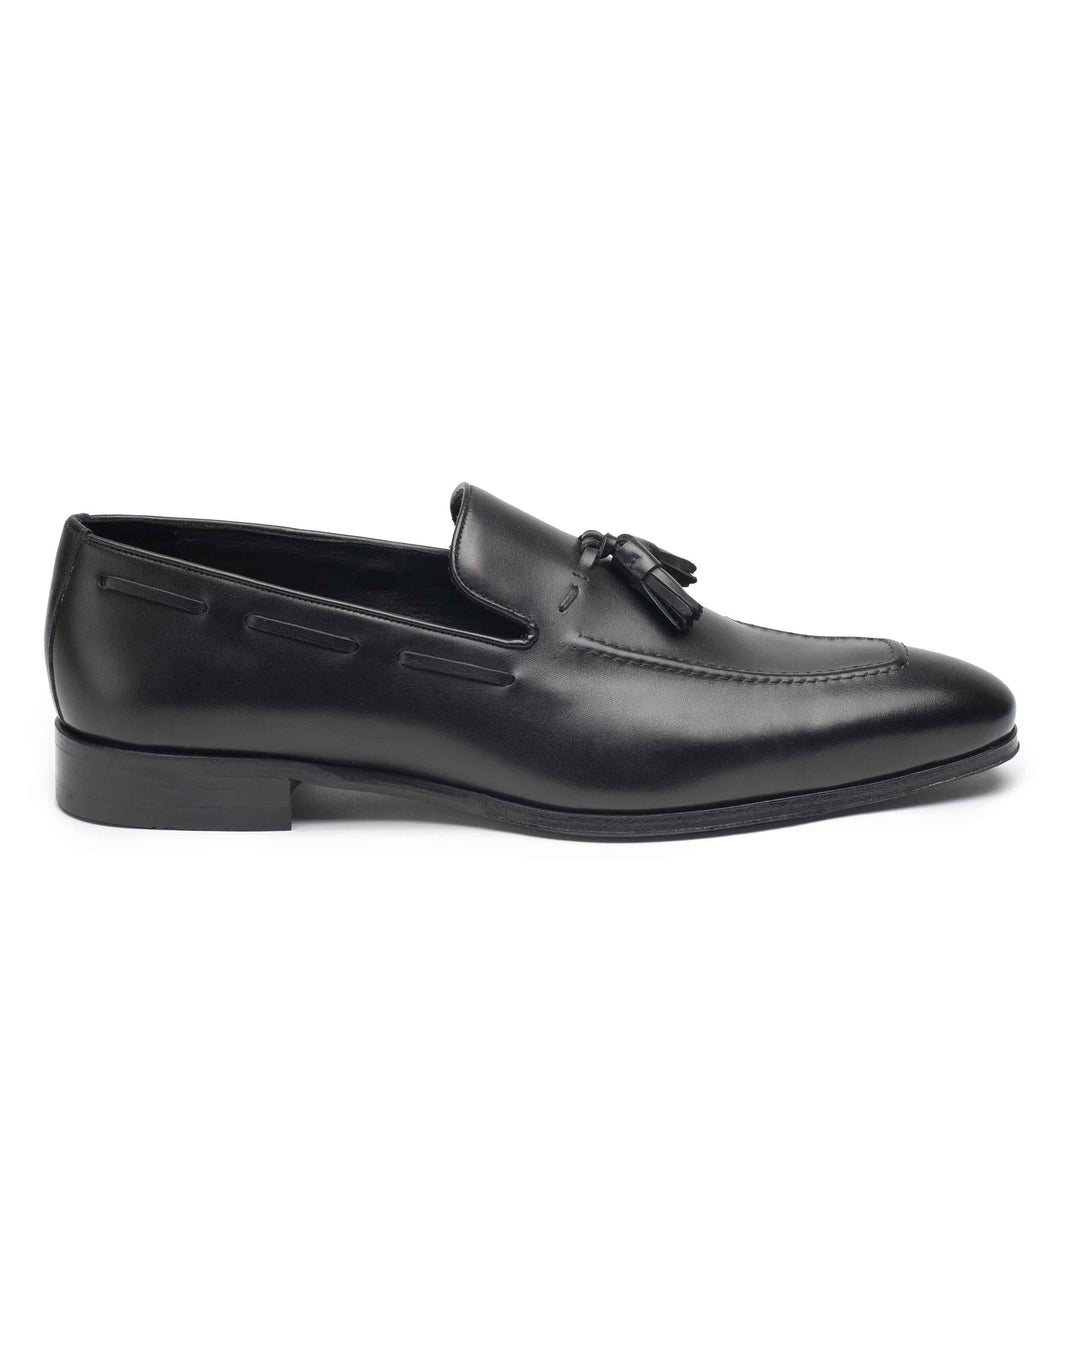 Buy Latest Design Loafers for Men Online – HEEL & BUCKLE LONDON